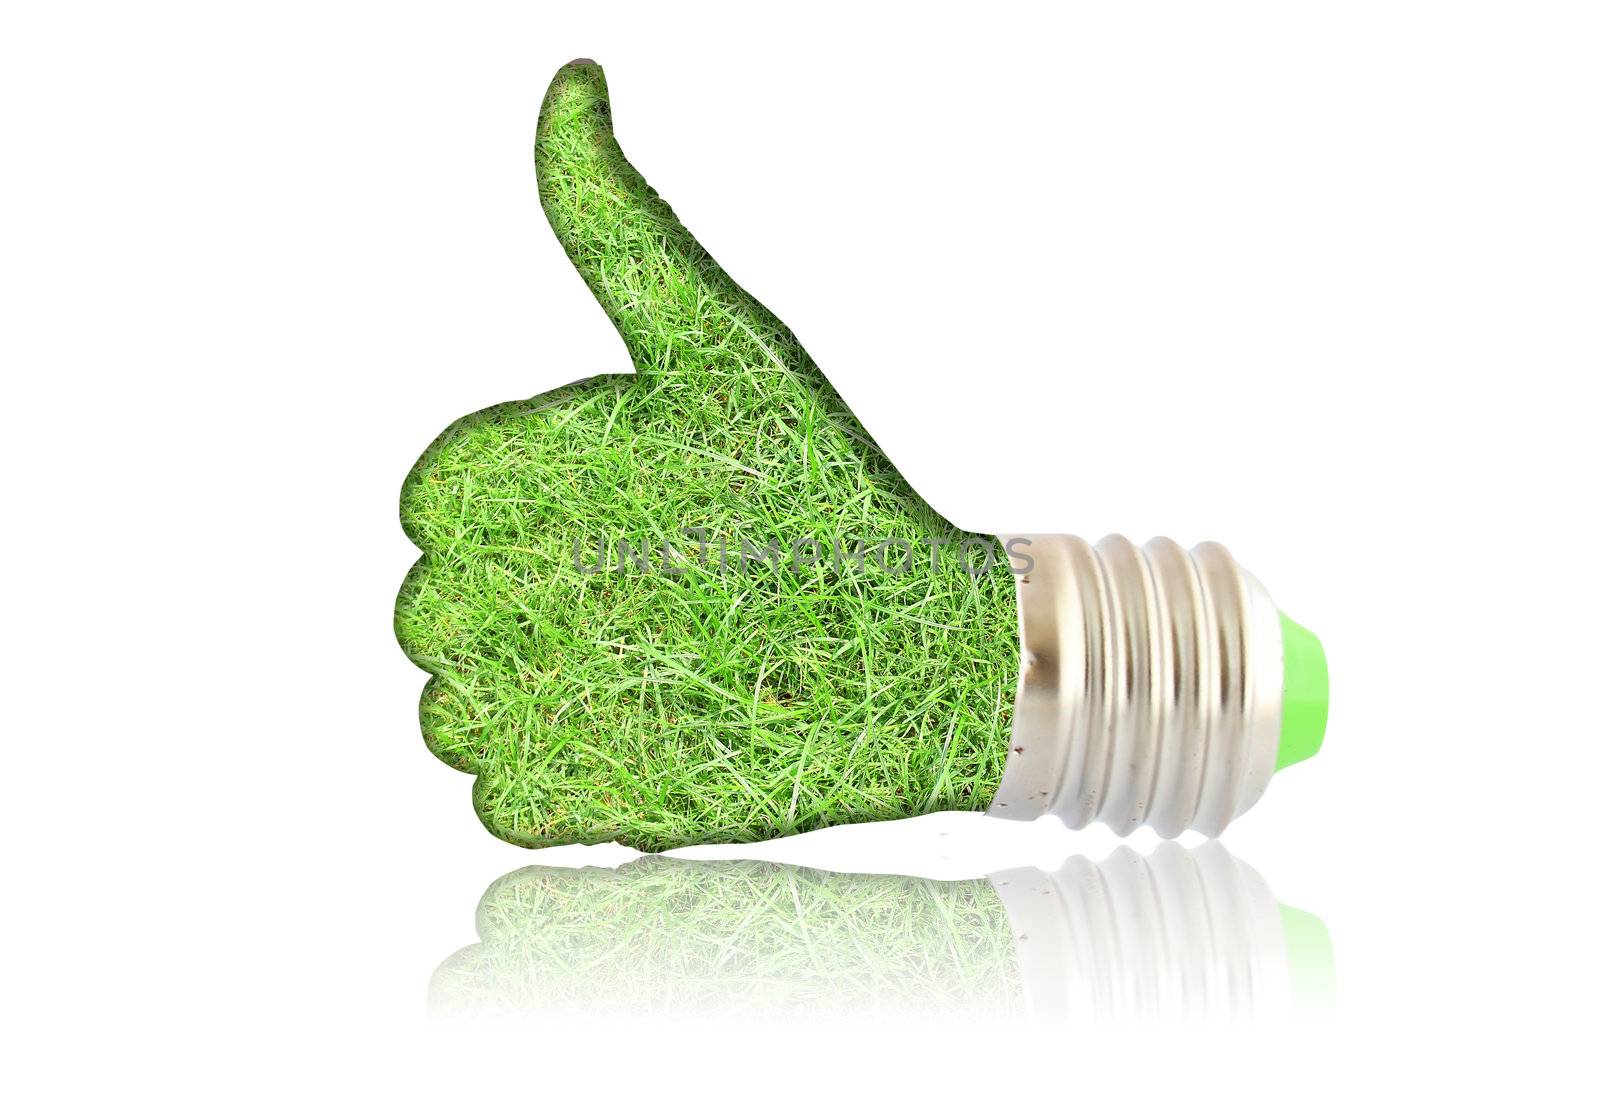 lightbulb - hand with grass. Concept - eco energy